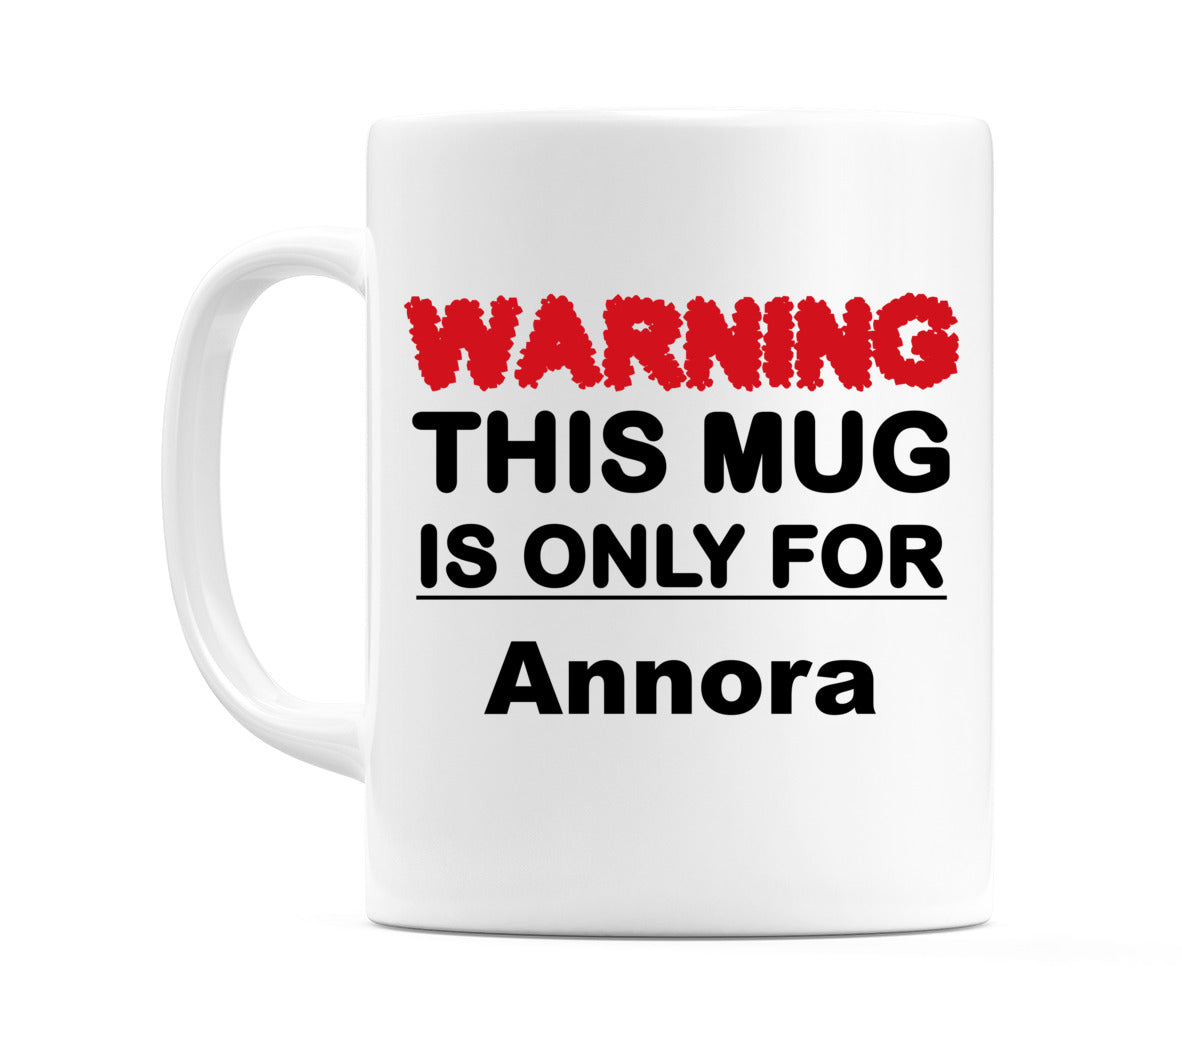 Warning This Mug is ONLY for Annora Mug